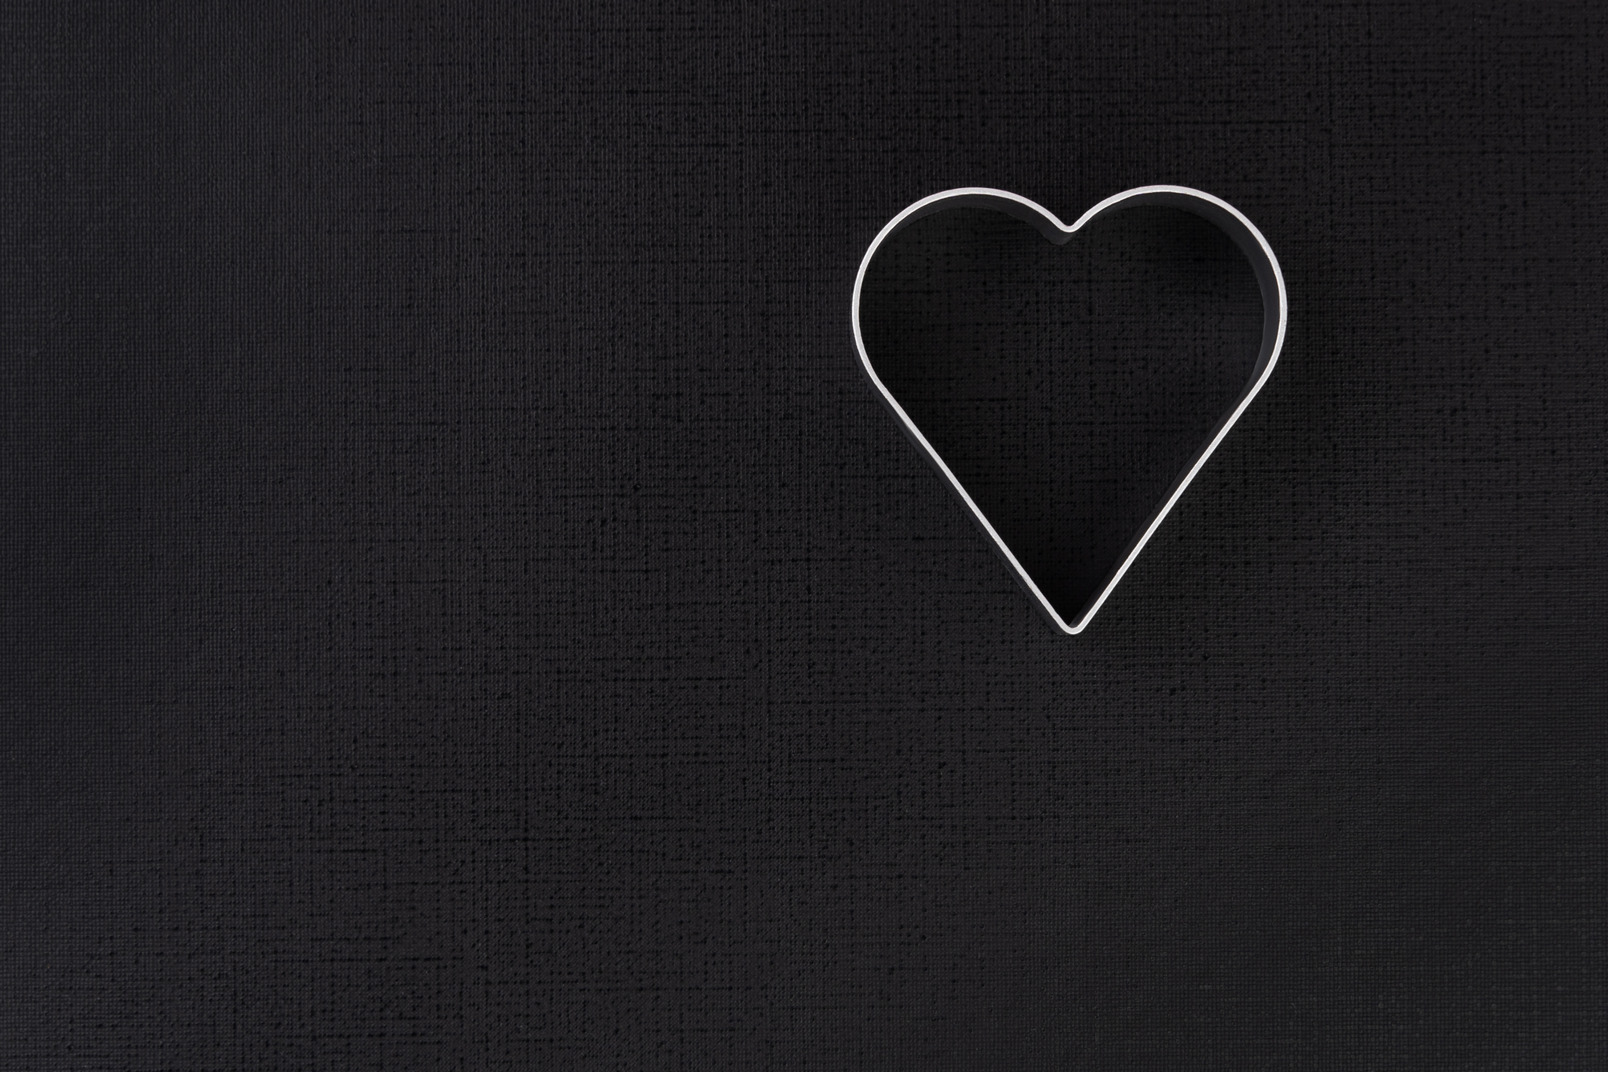 Heart shape on the black